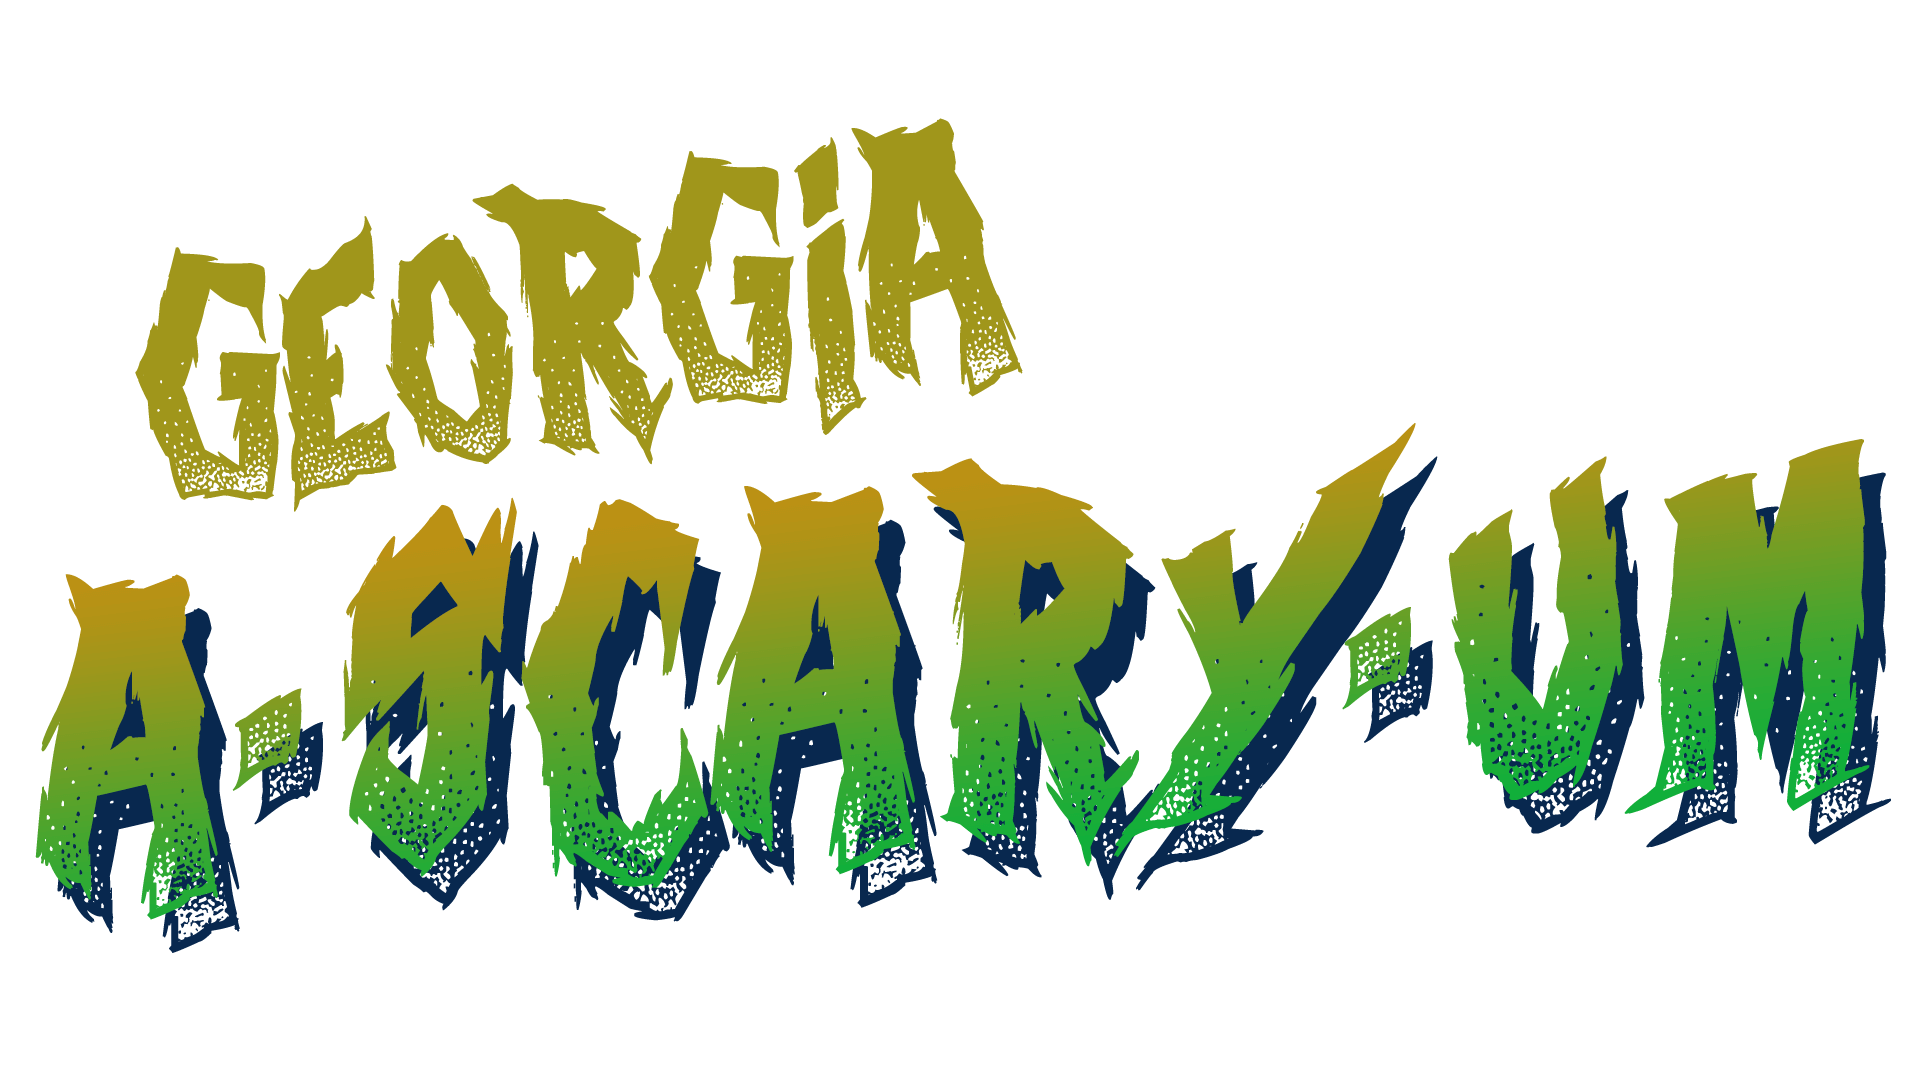 Georgia A-Scary-Um logo type treatment